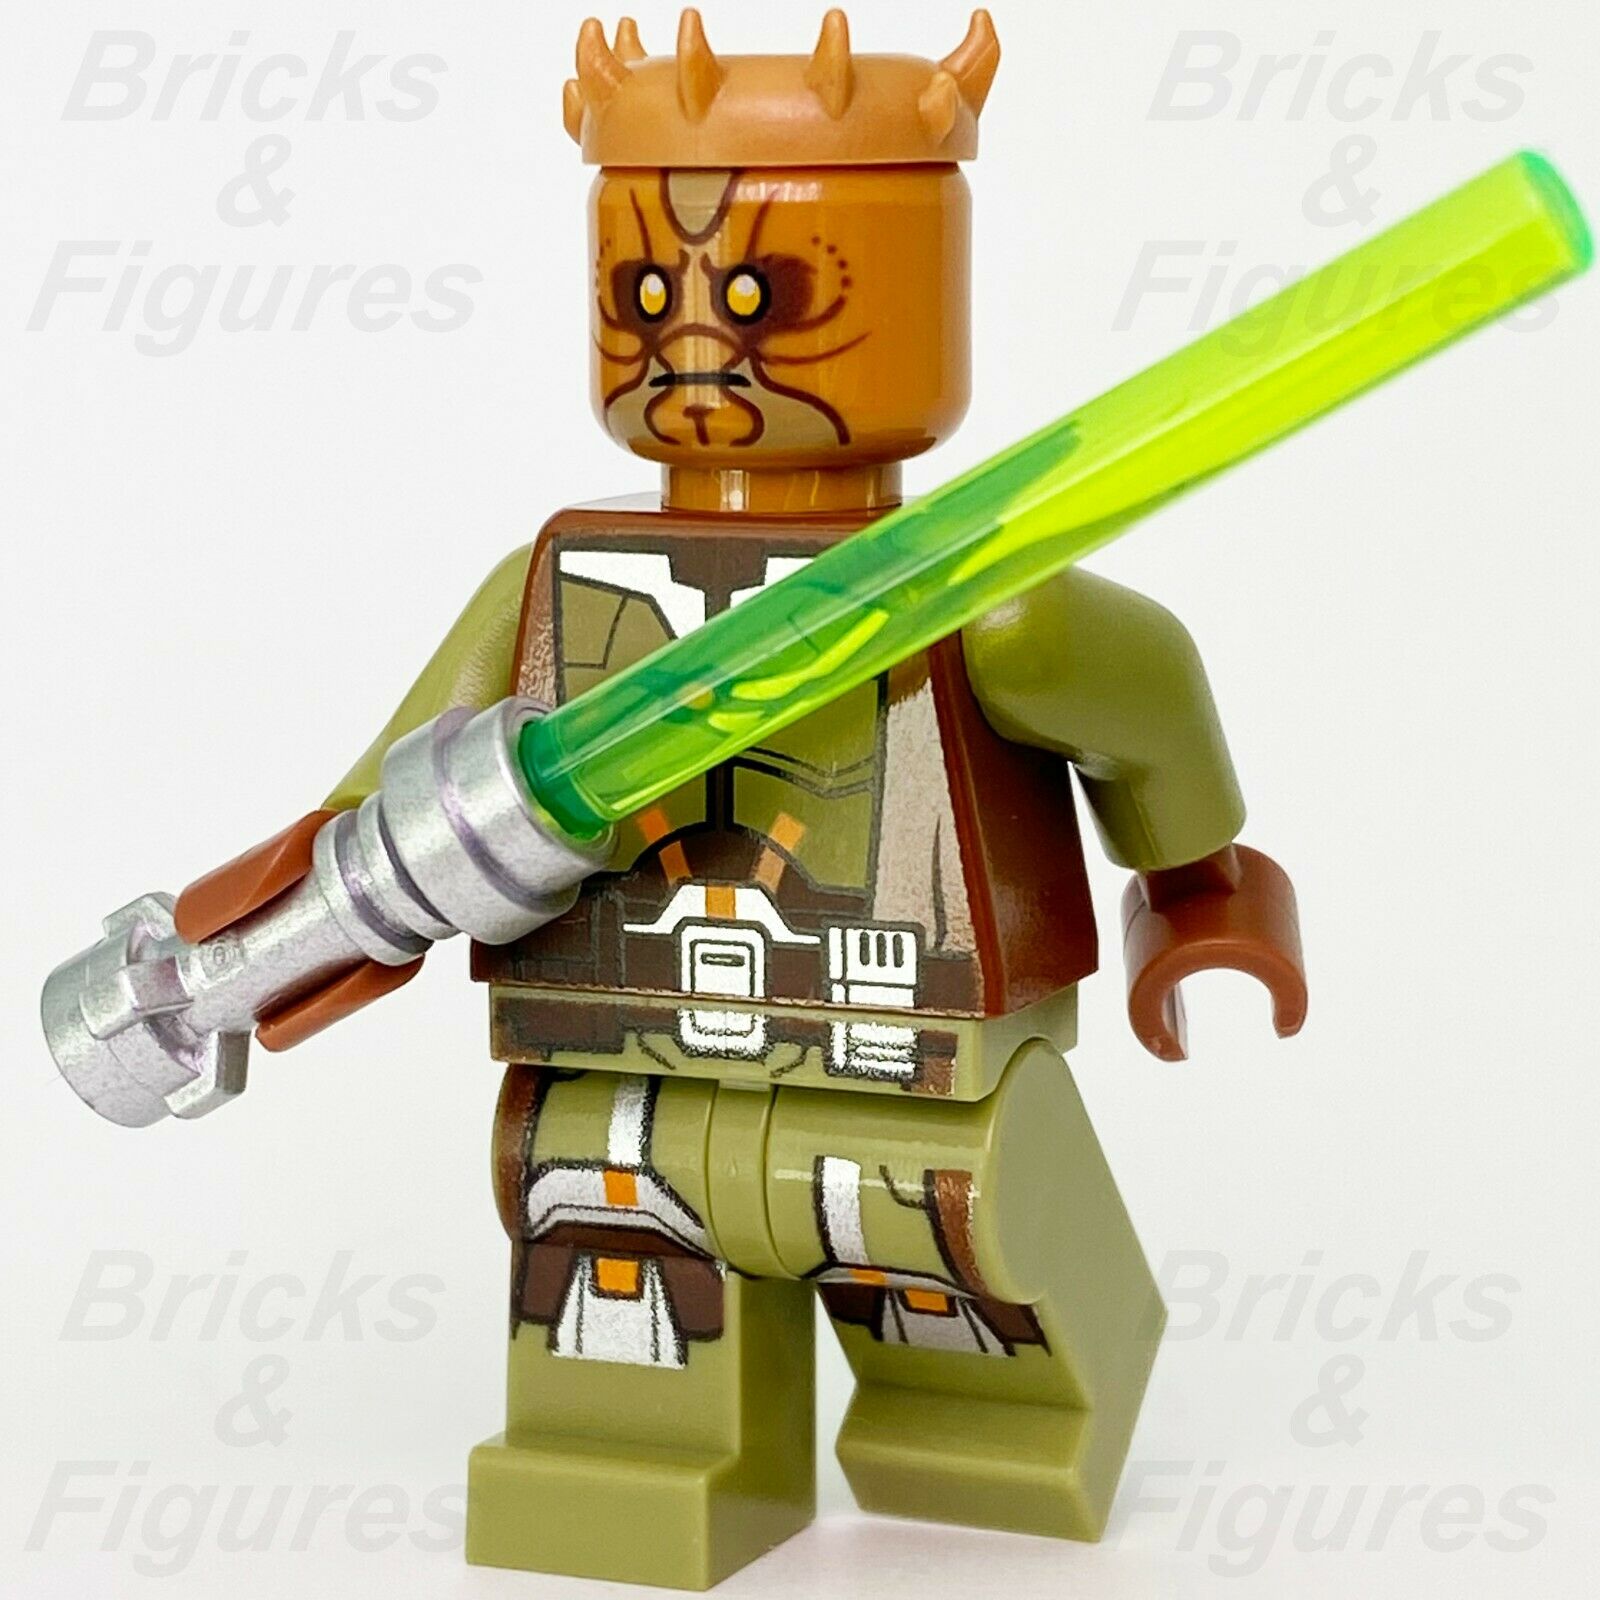 New Star Wars LEGO Kao Cen Darach Jedi Knight The Old Republic Minifigure 75025 - Bricks & Figures